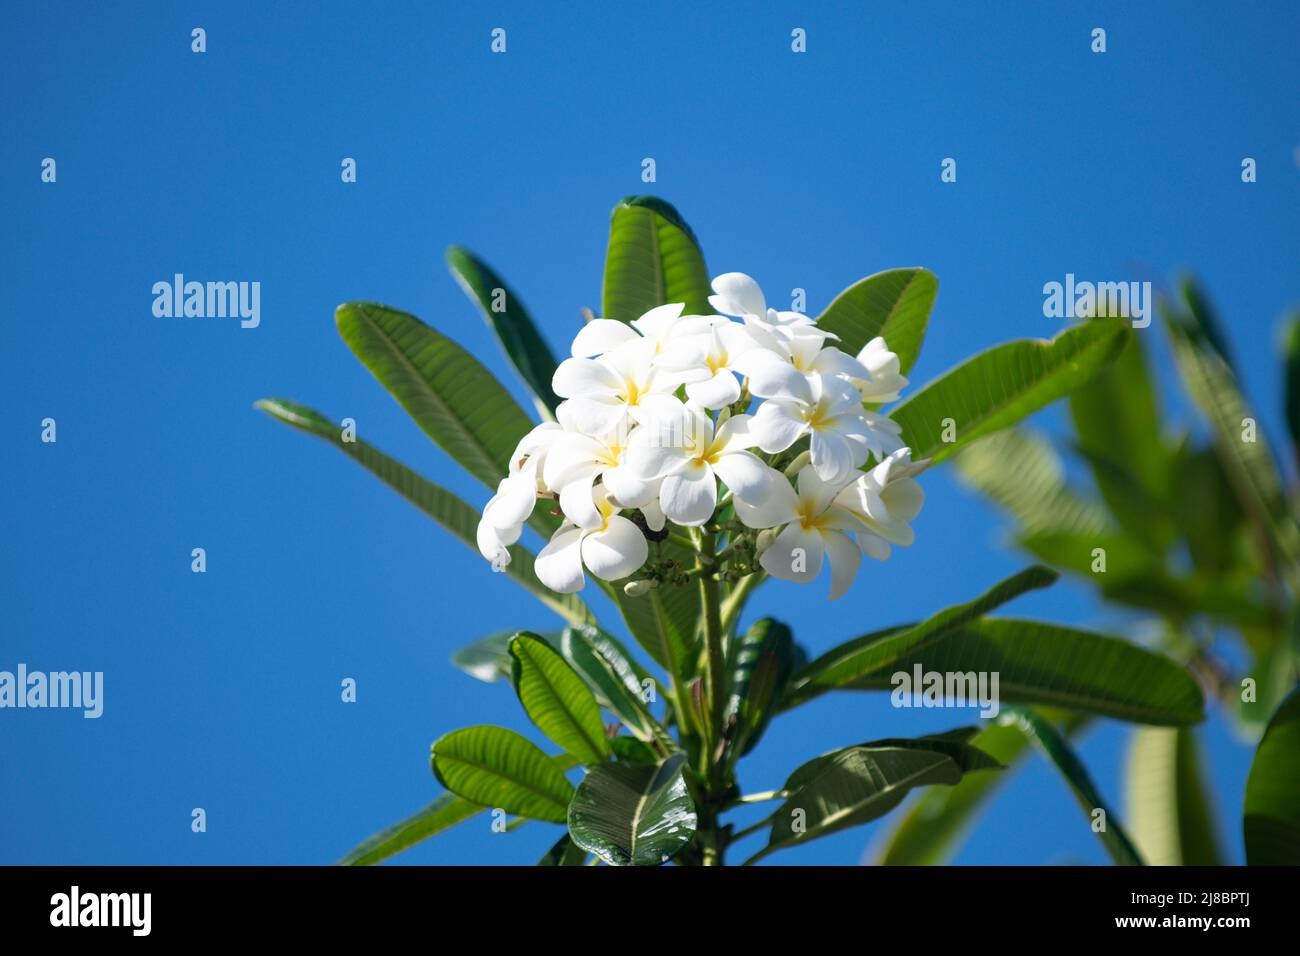 Flores blancas de plumeria rubra sobre fondo de cielo azul. Frangipani flor.  Plumeria pudica flores blancas floreciendo, con hojas verdes de fondo  Fotografía de stock - Alamy